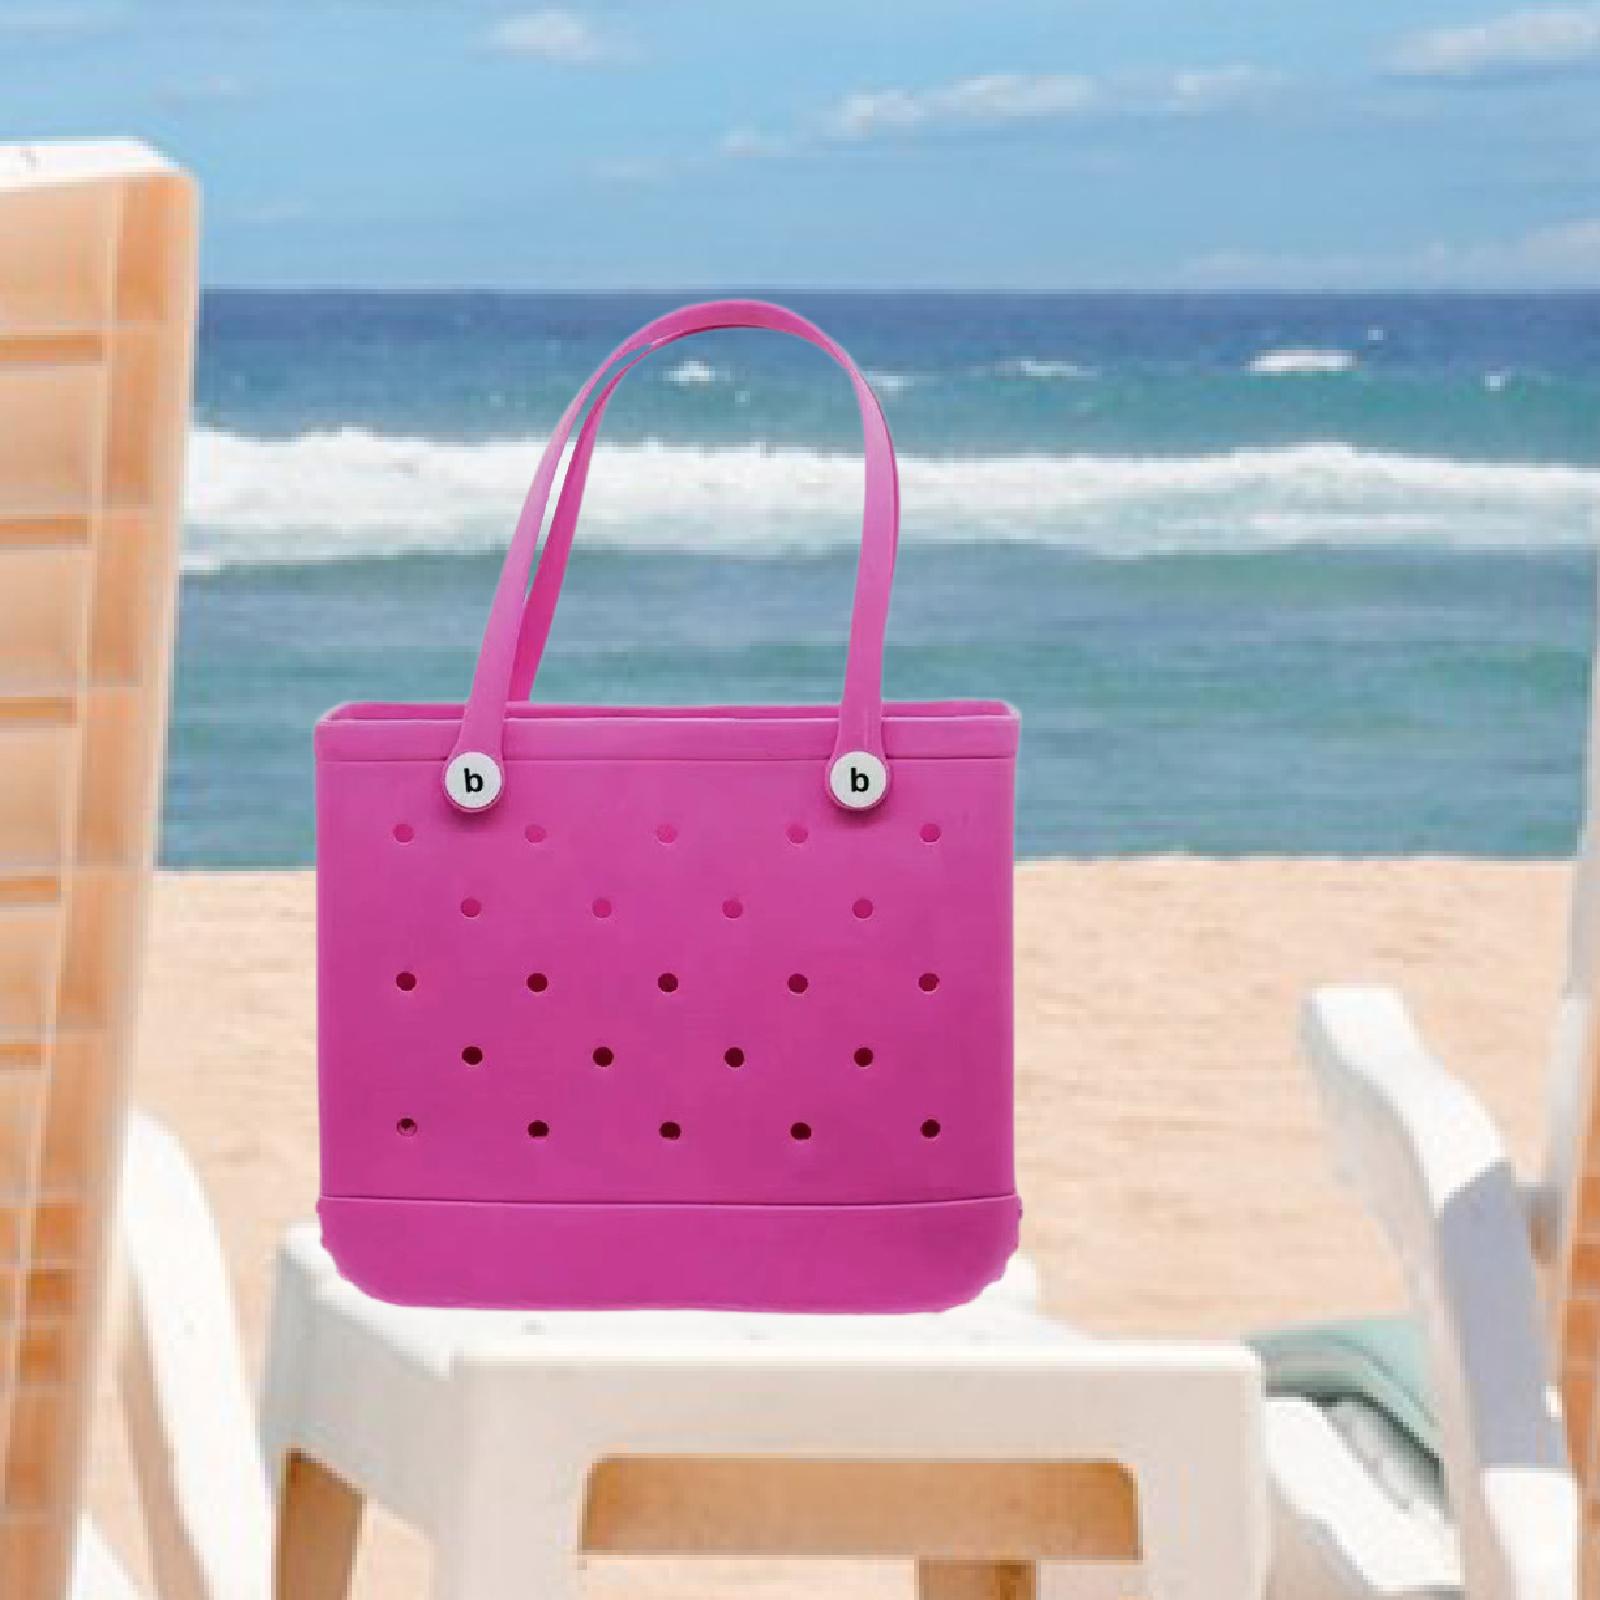 Beach Tote Bag Lightweight Waterproof Beach Handbag for Outdoor Holiday Shopping 38cmx13cmx32cm Rose Red